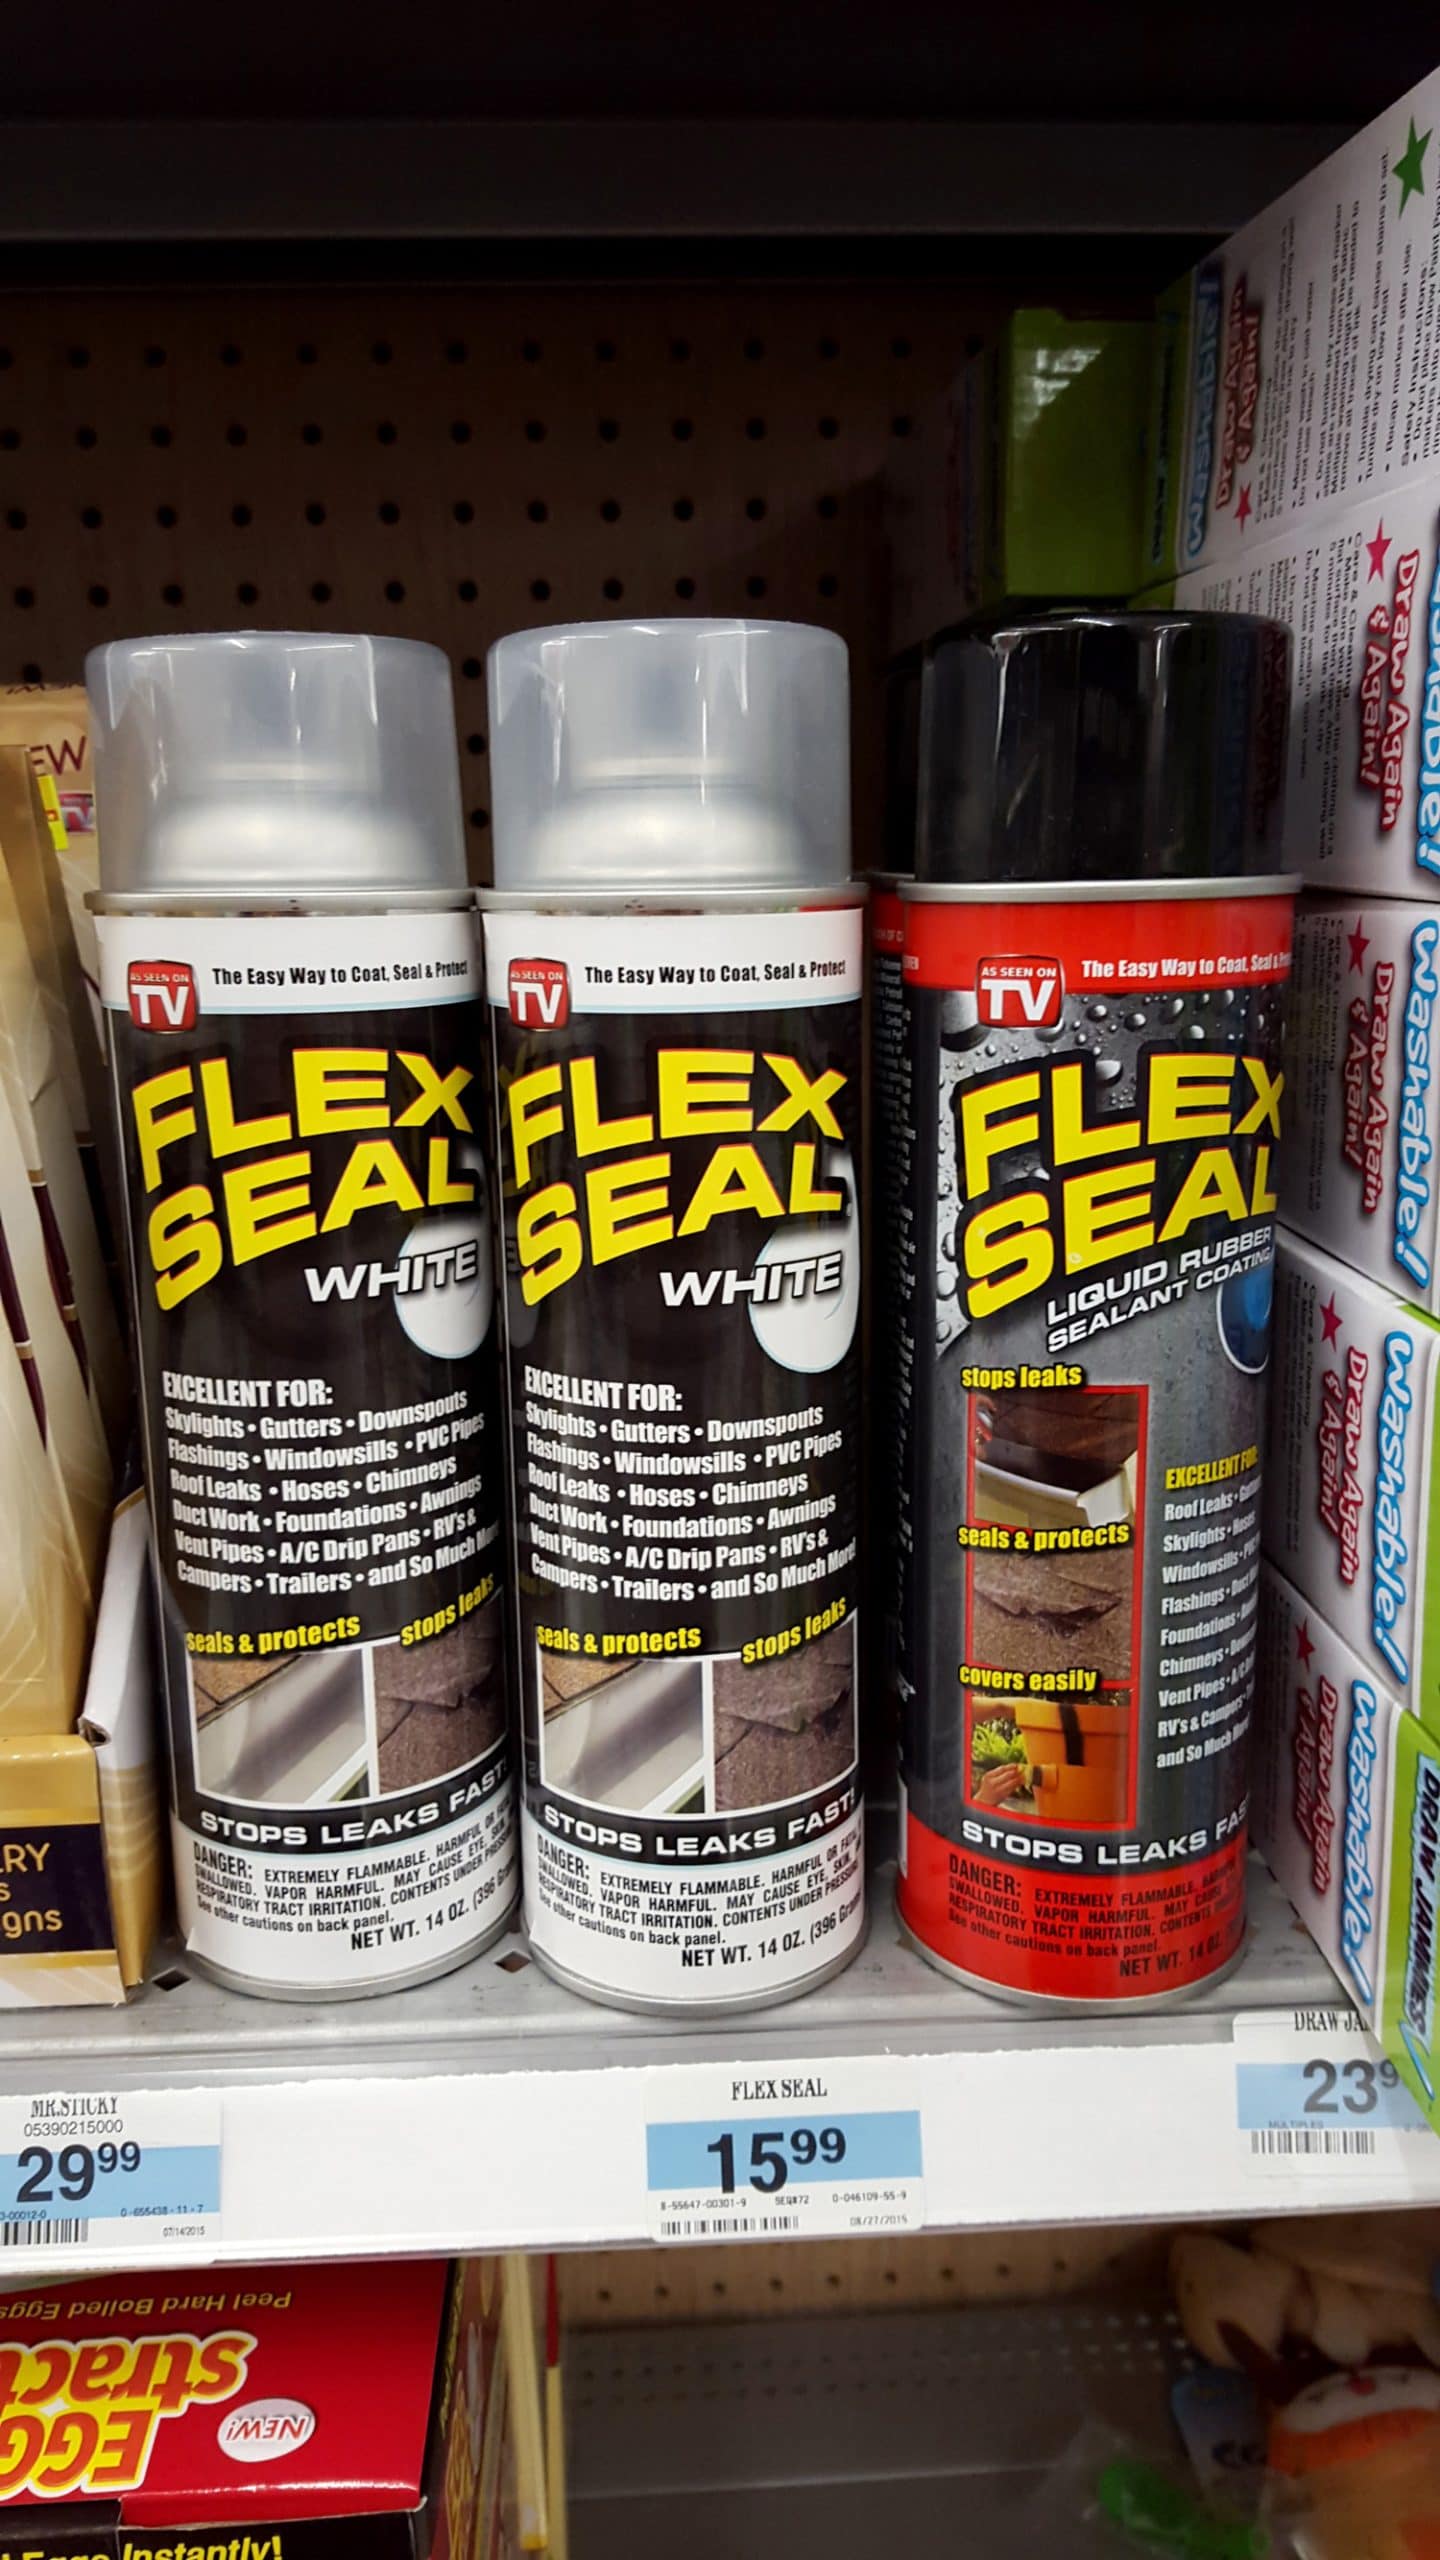 lex Seal spray as seen on TV for sale on store shelf inside of Kmart.